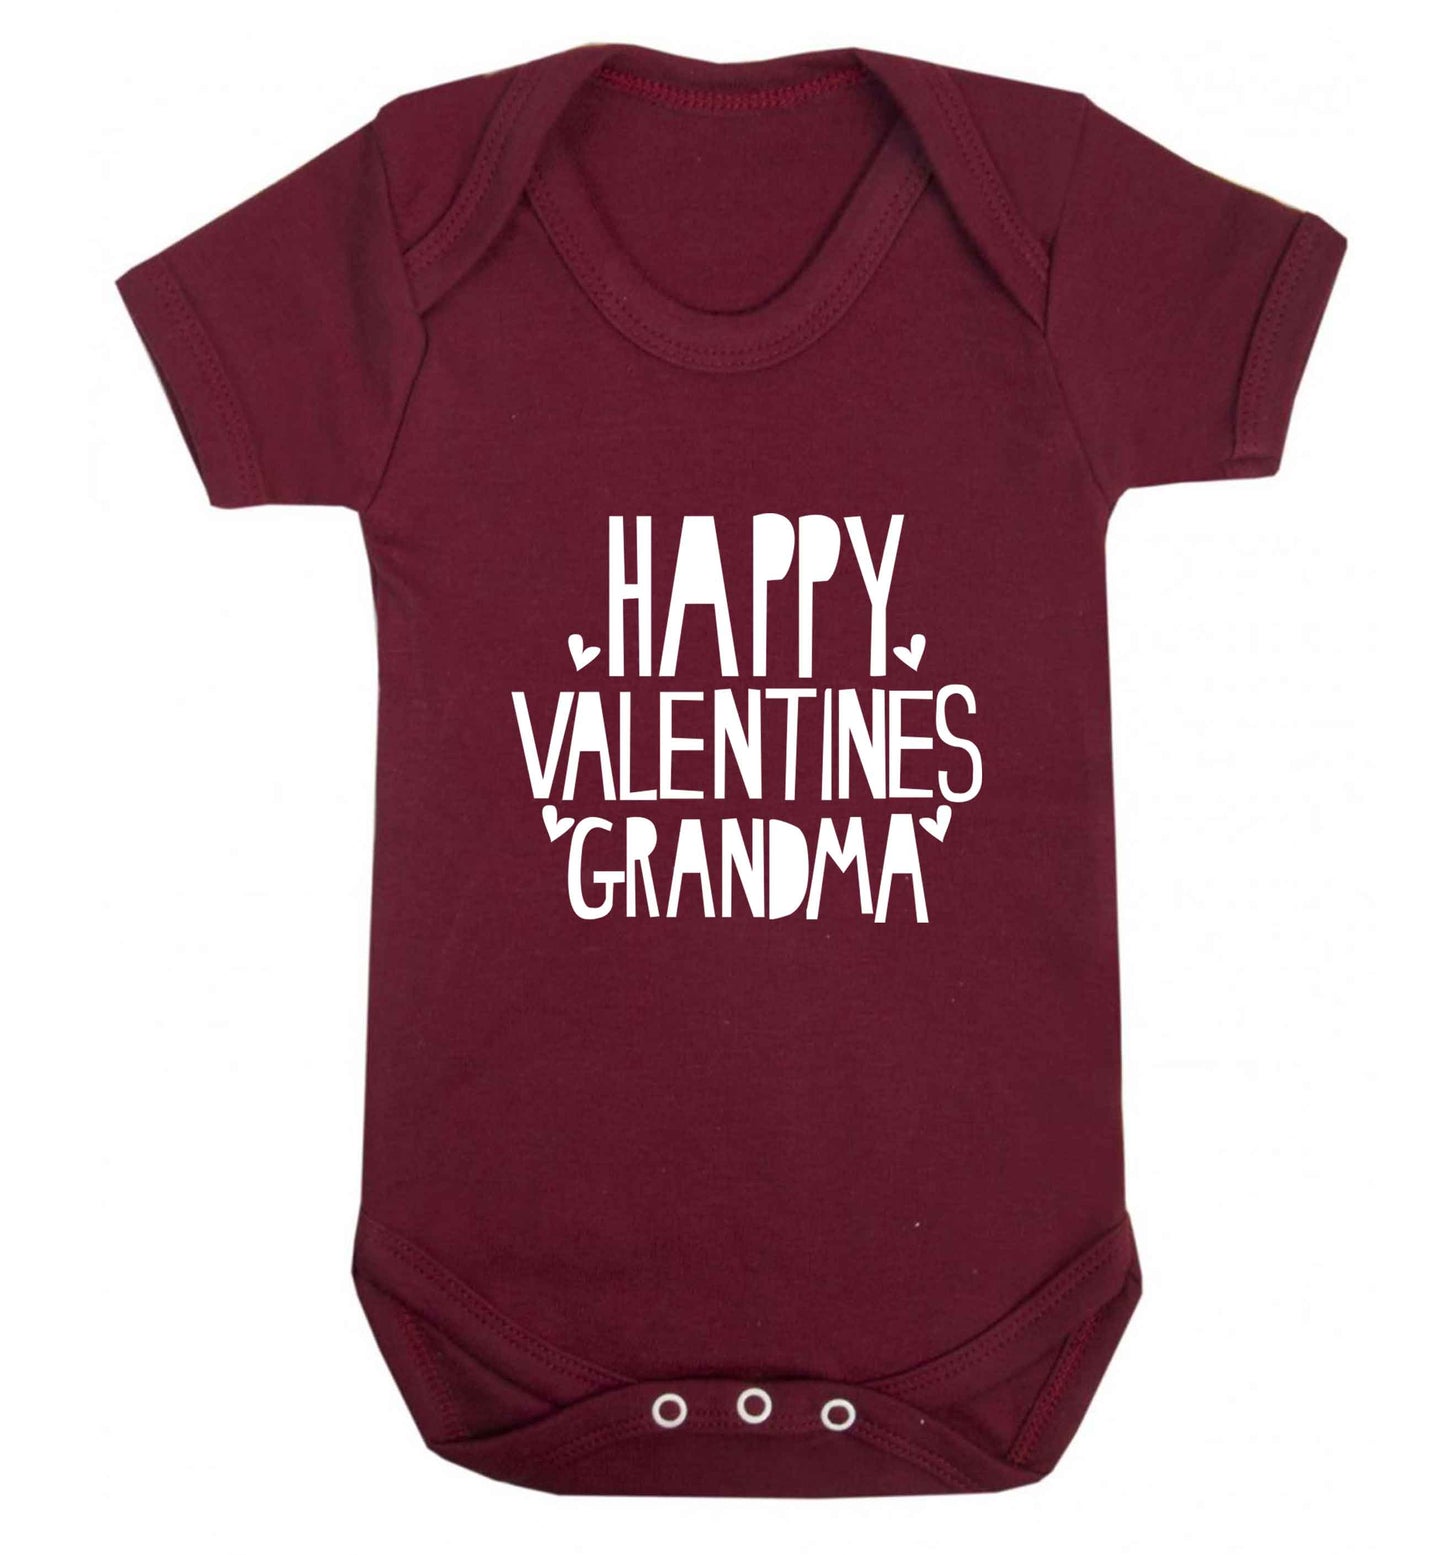 Happy valentines grandma baby vest maroon 18-24 months